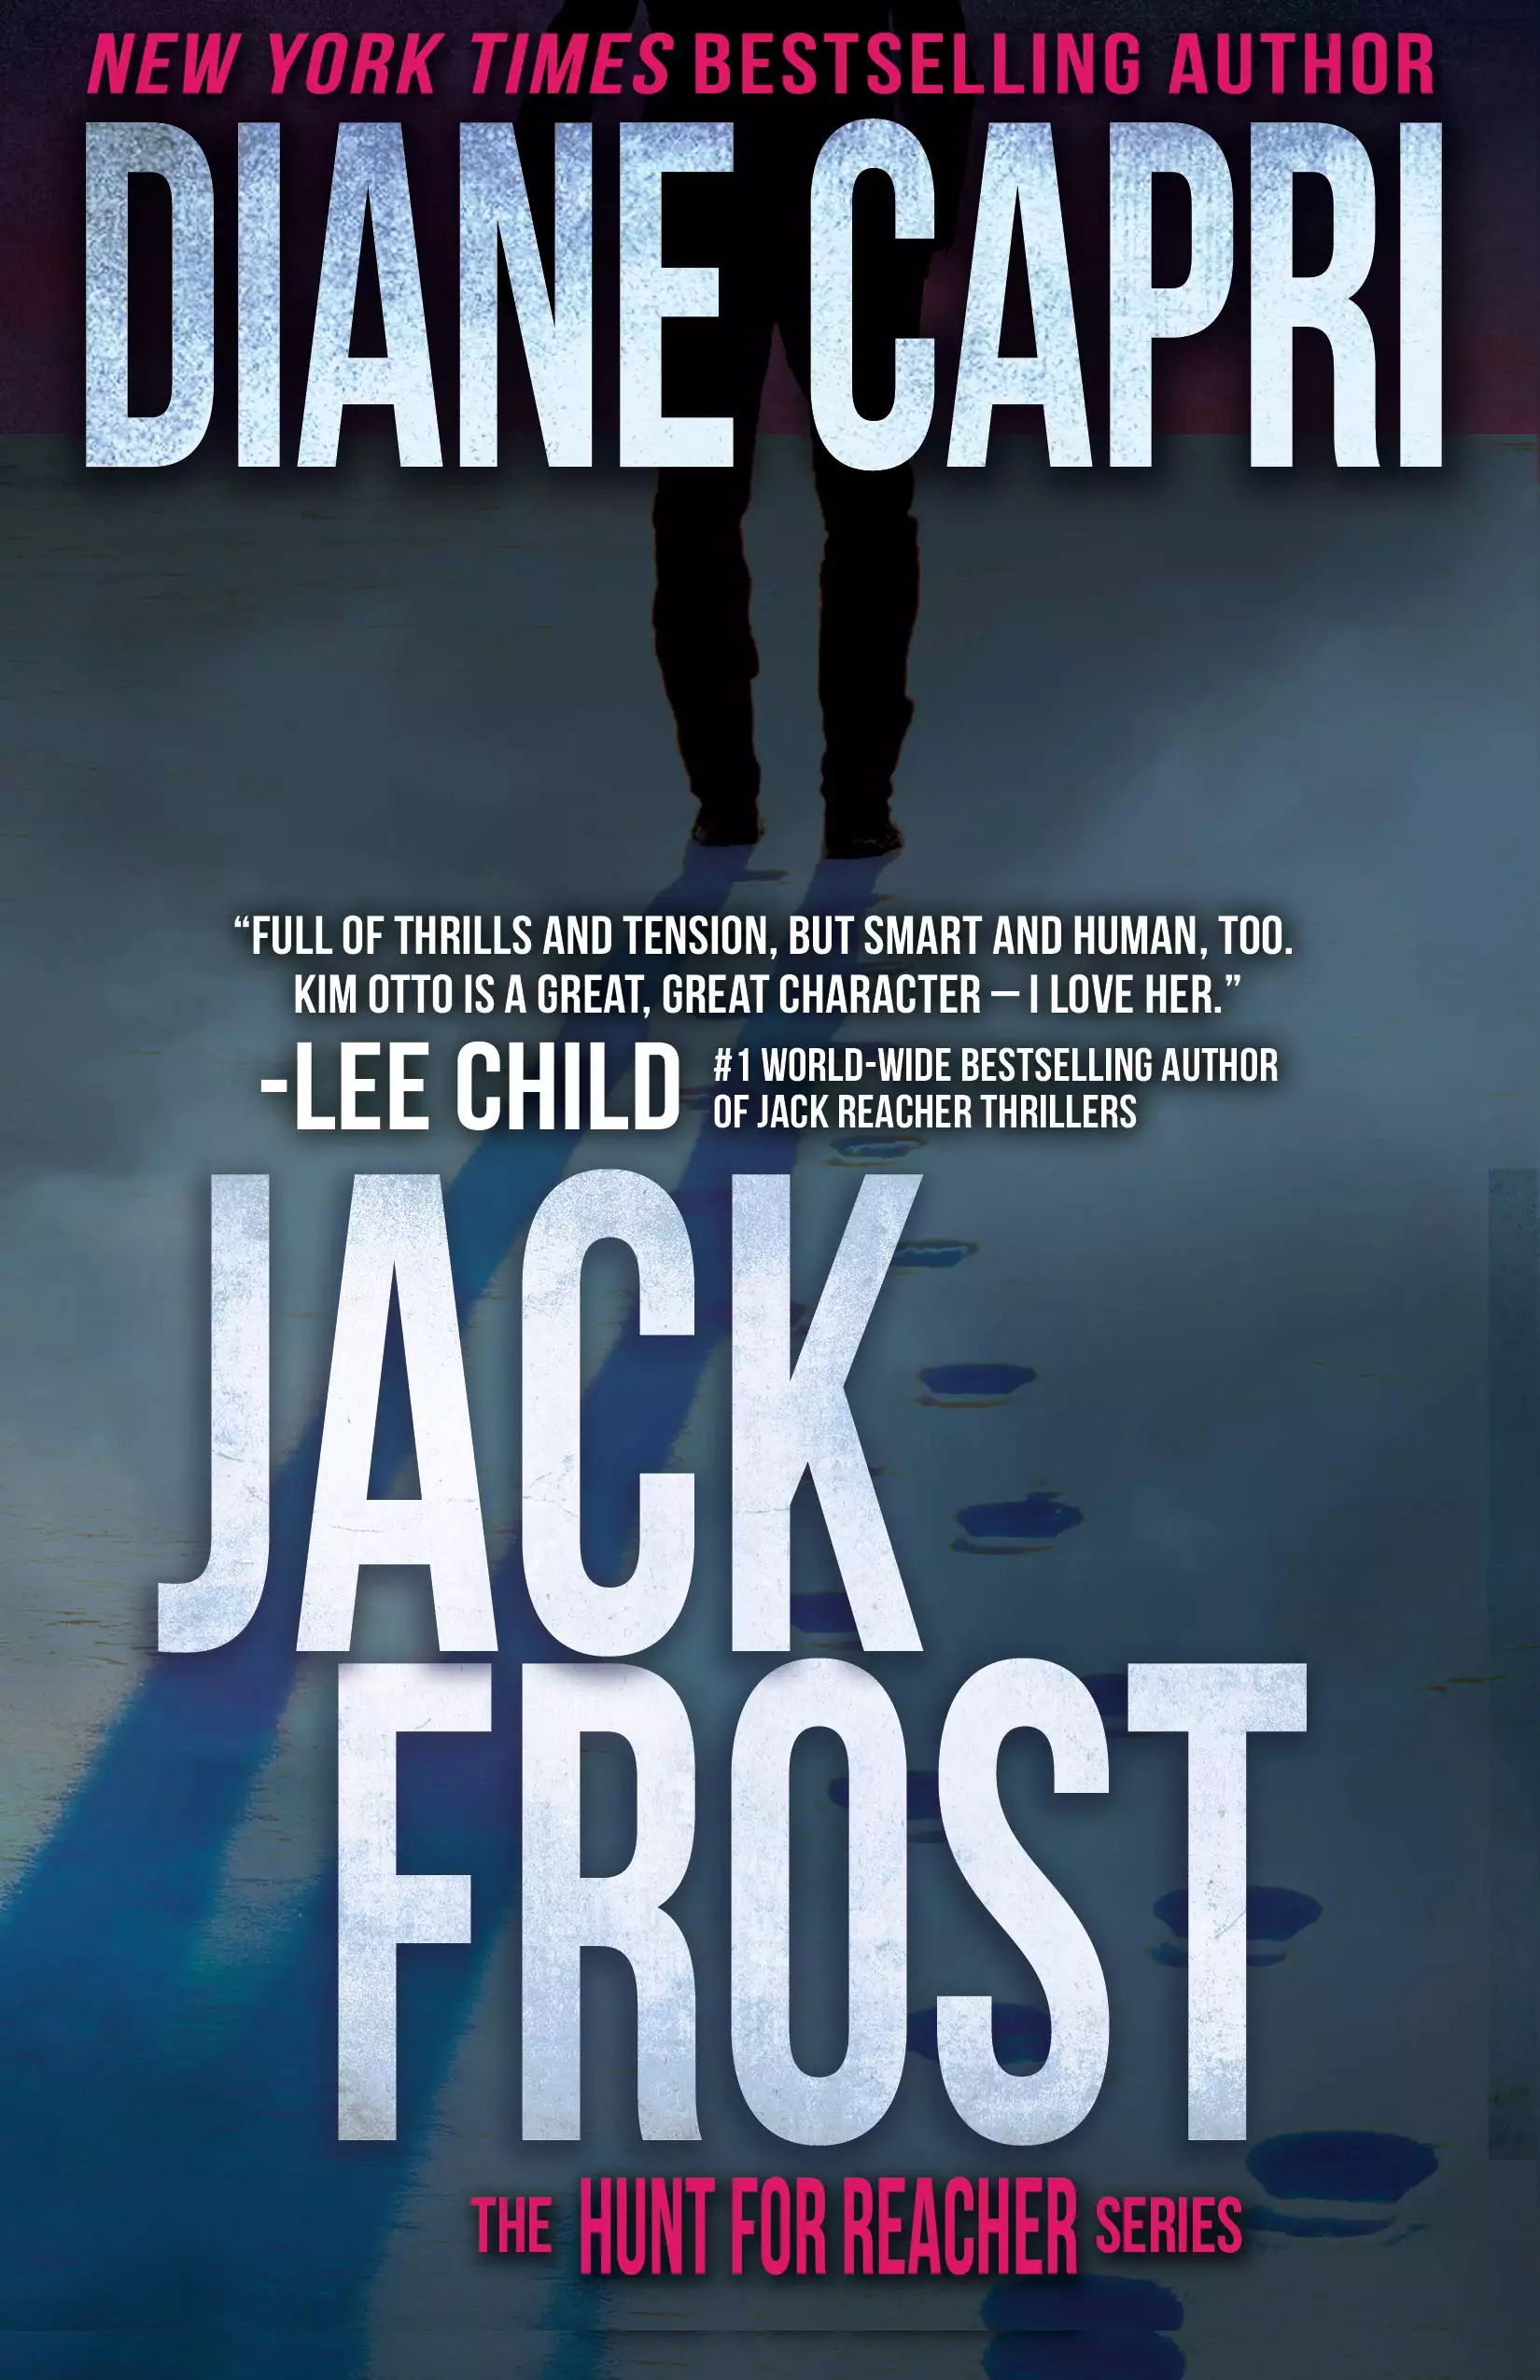 Jack Frost: Hunting Lee Child's Jack Reacher